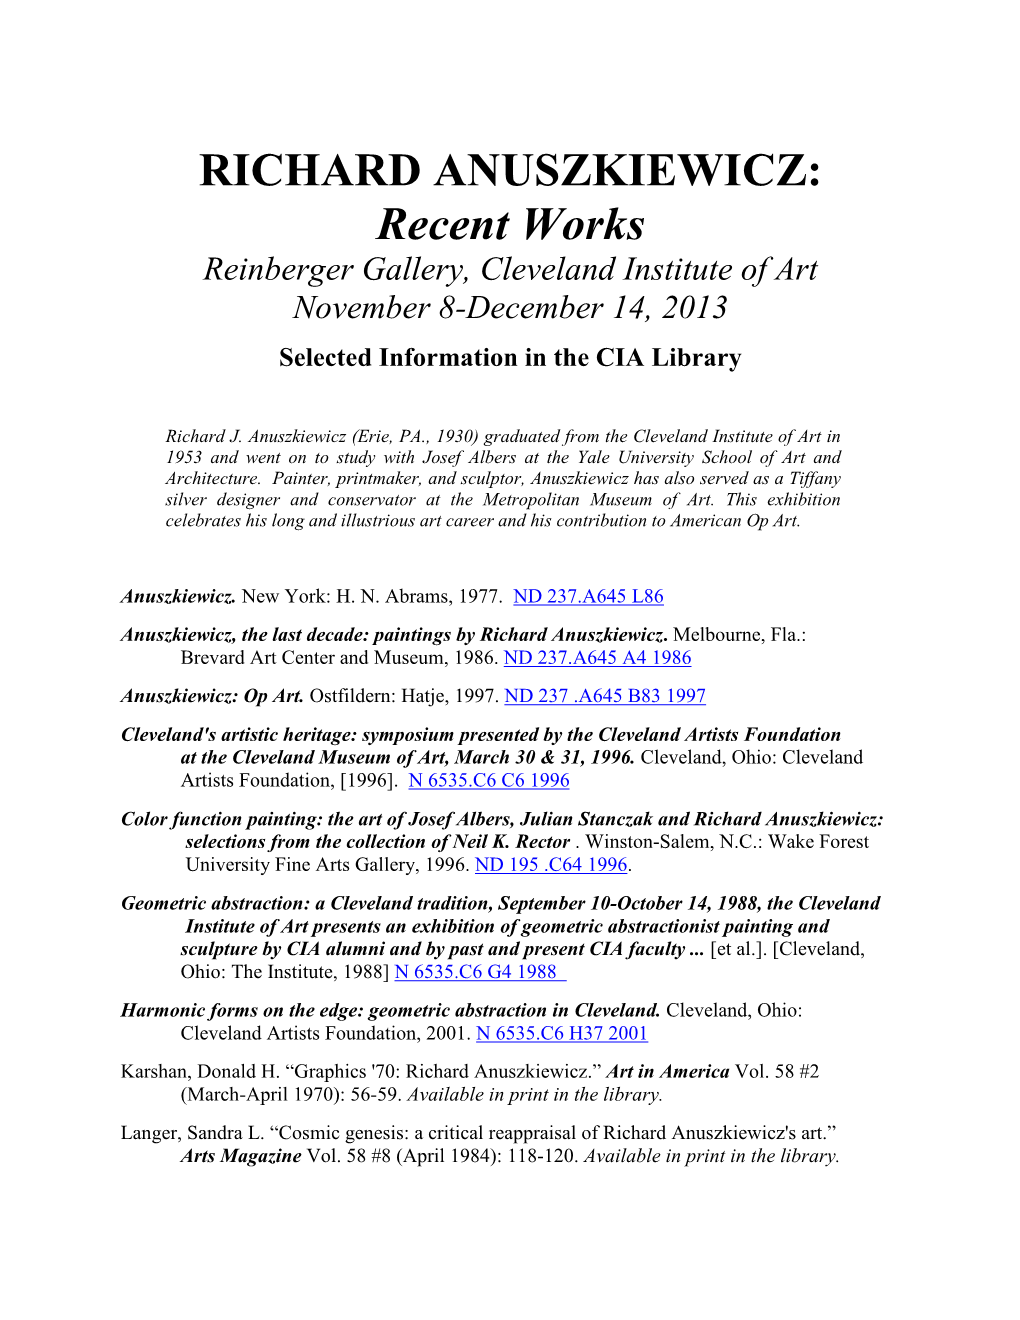 RICHARD ANUSZKIEWICZ: Recent Works Reinberger Gallery, Cleveland Institute of Art November 8-December 14, 2013